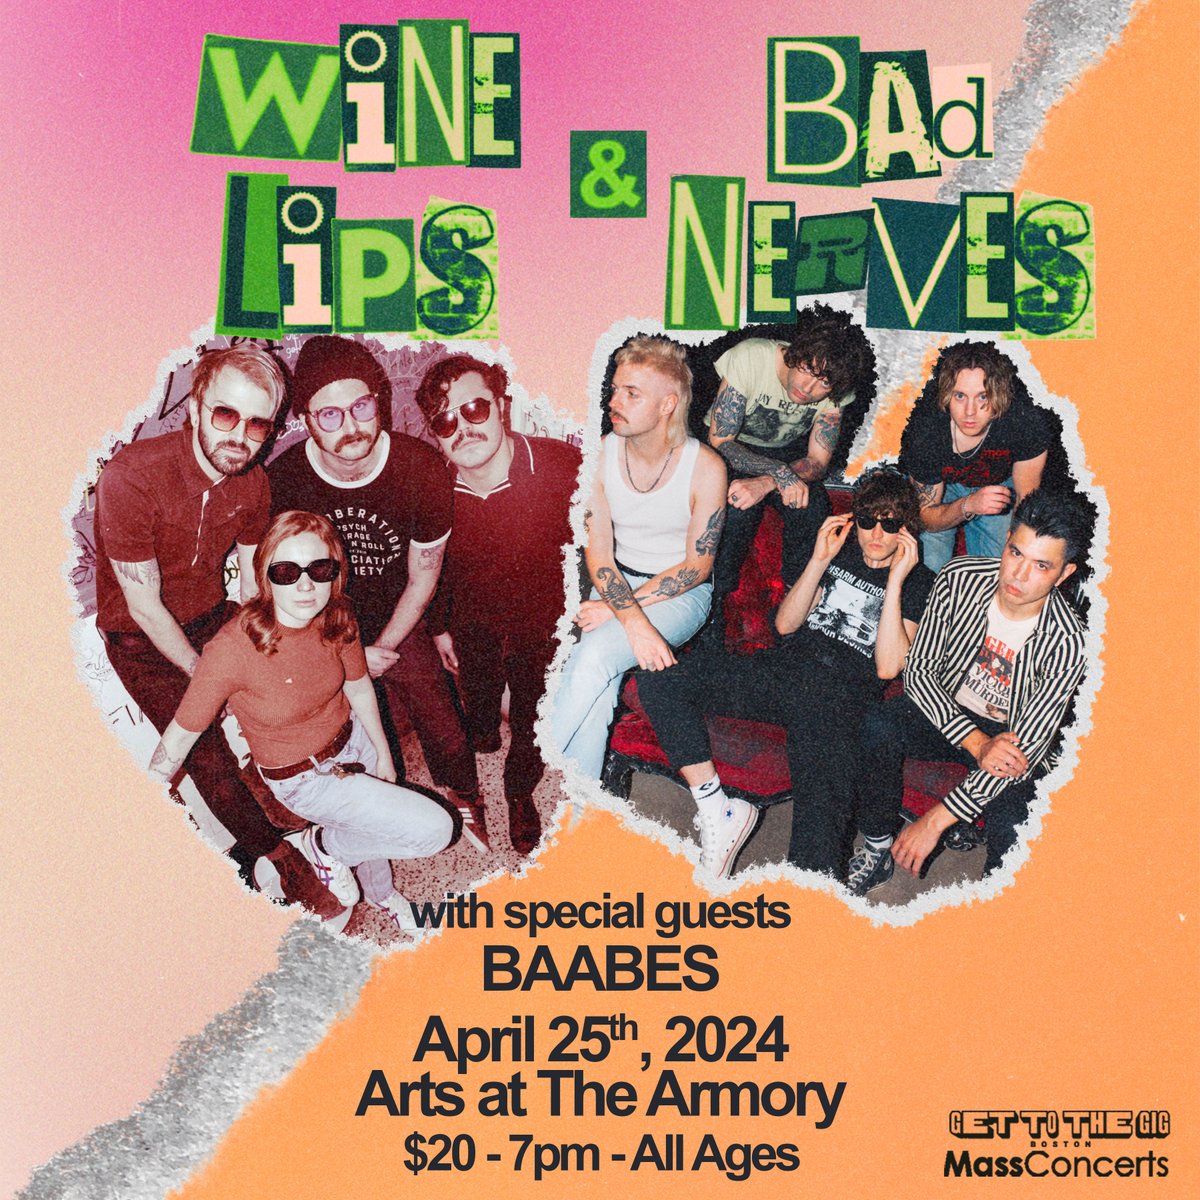 TOMORROW @Winelipsband & @BADBADNERVES at @ArtsattheArmory with @BaabesBoston! 🎟 ------> seetickets.us/event/wine-lip…